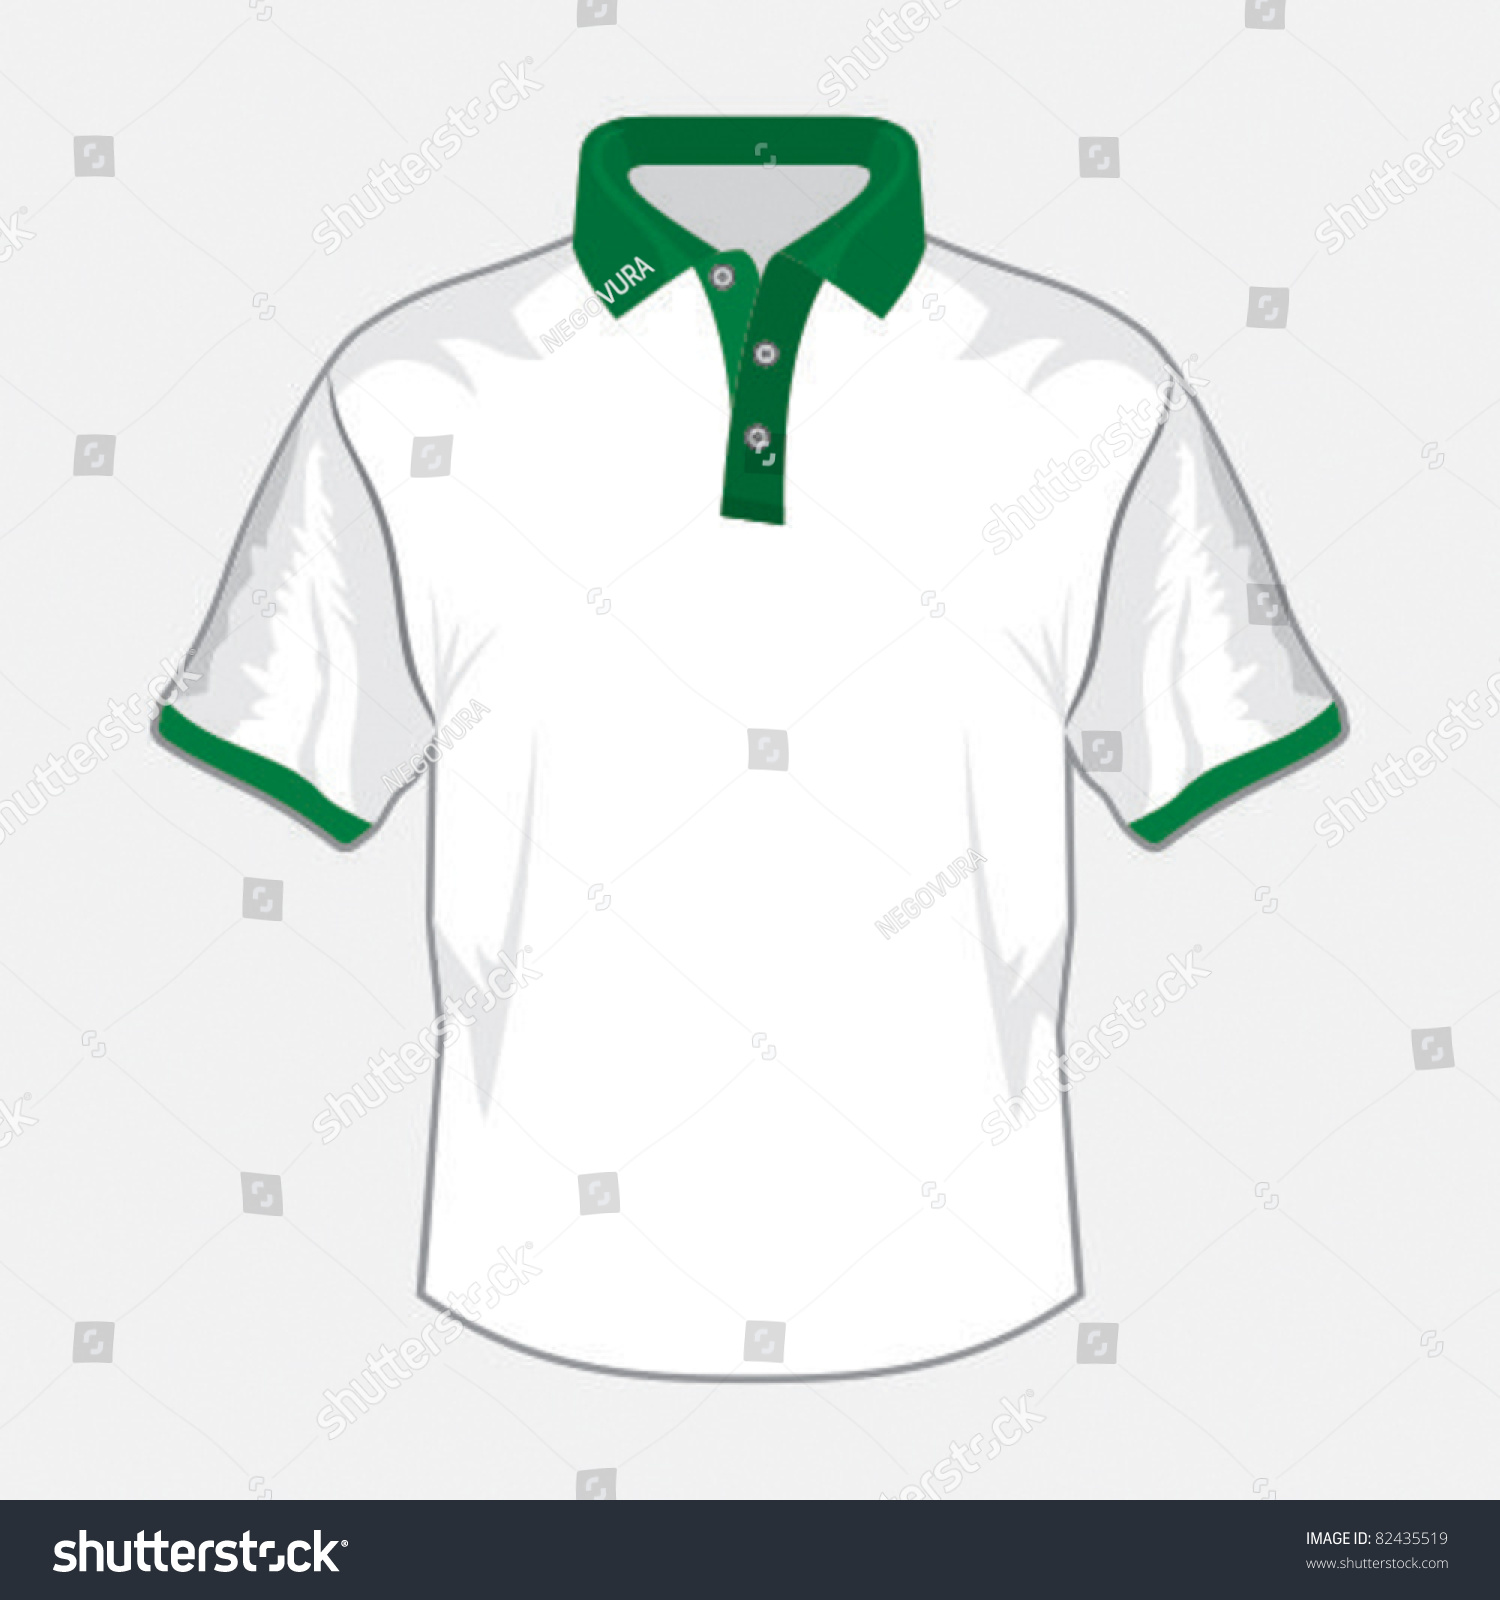 White Polo Shirt Design With Green Collar Stock Vector Illustration ...